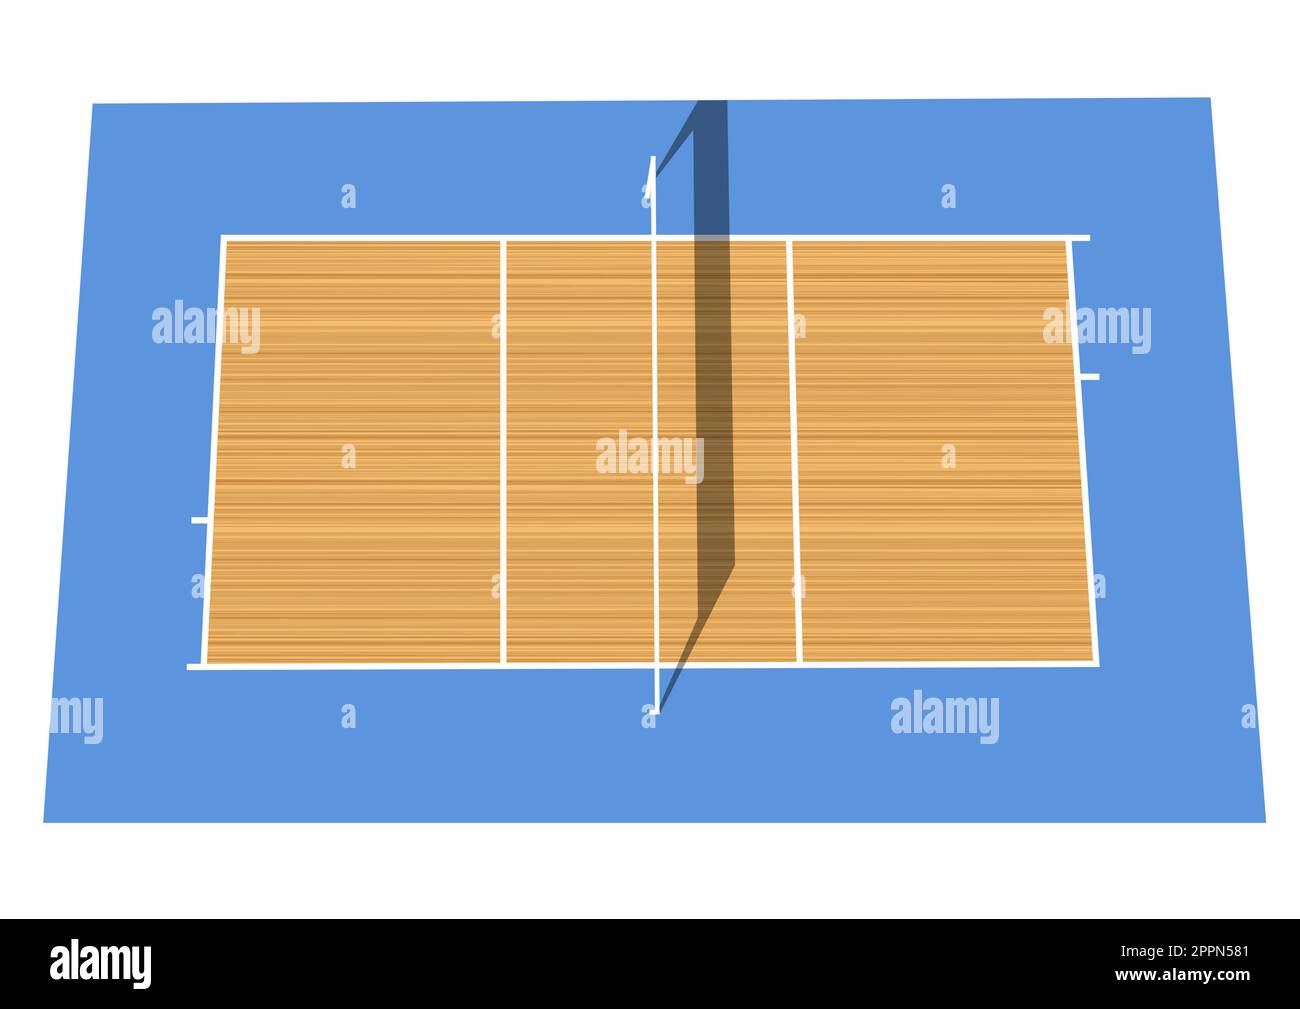 Handball Court Dimensions & Drawings | Dimensions.com